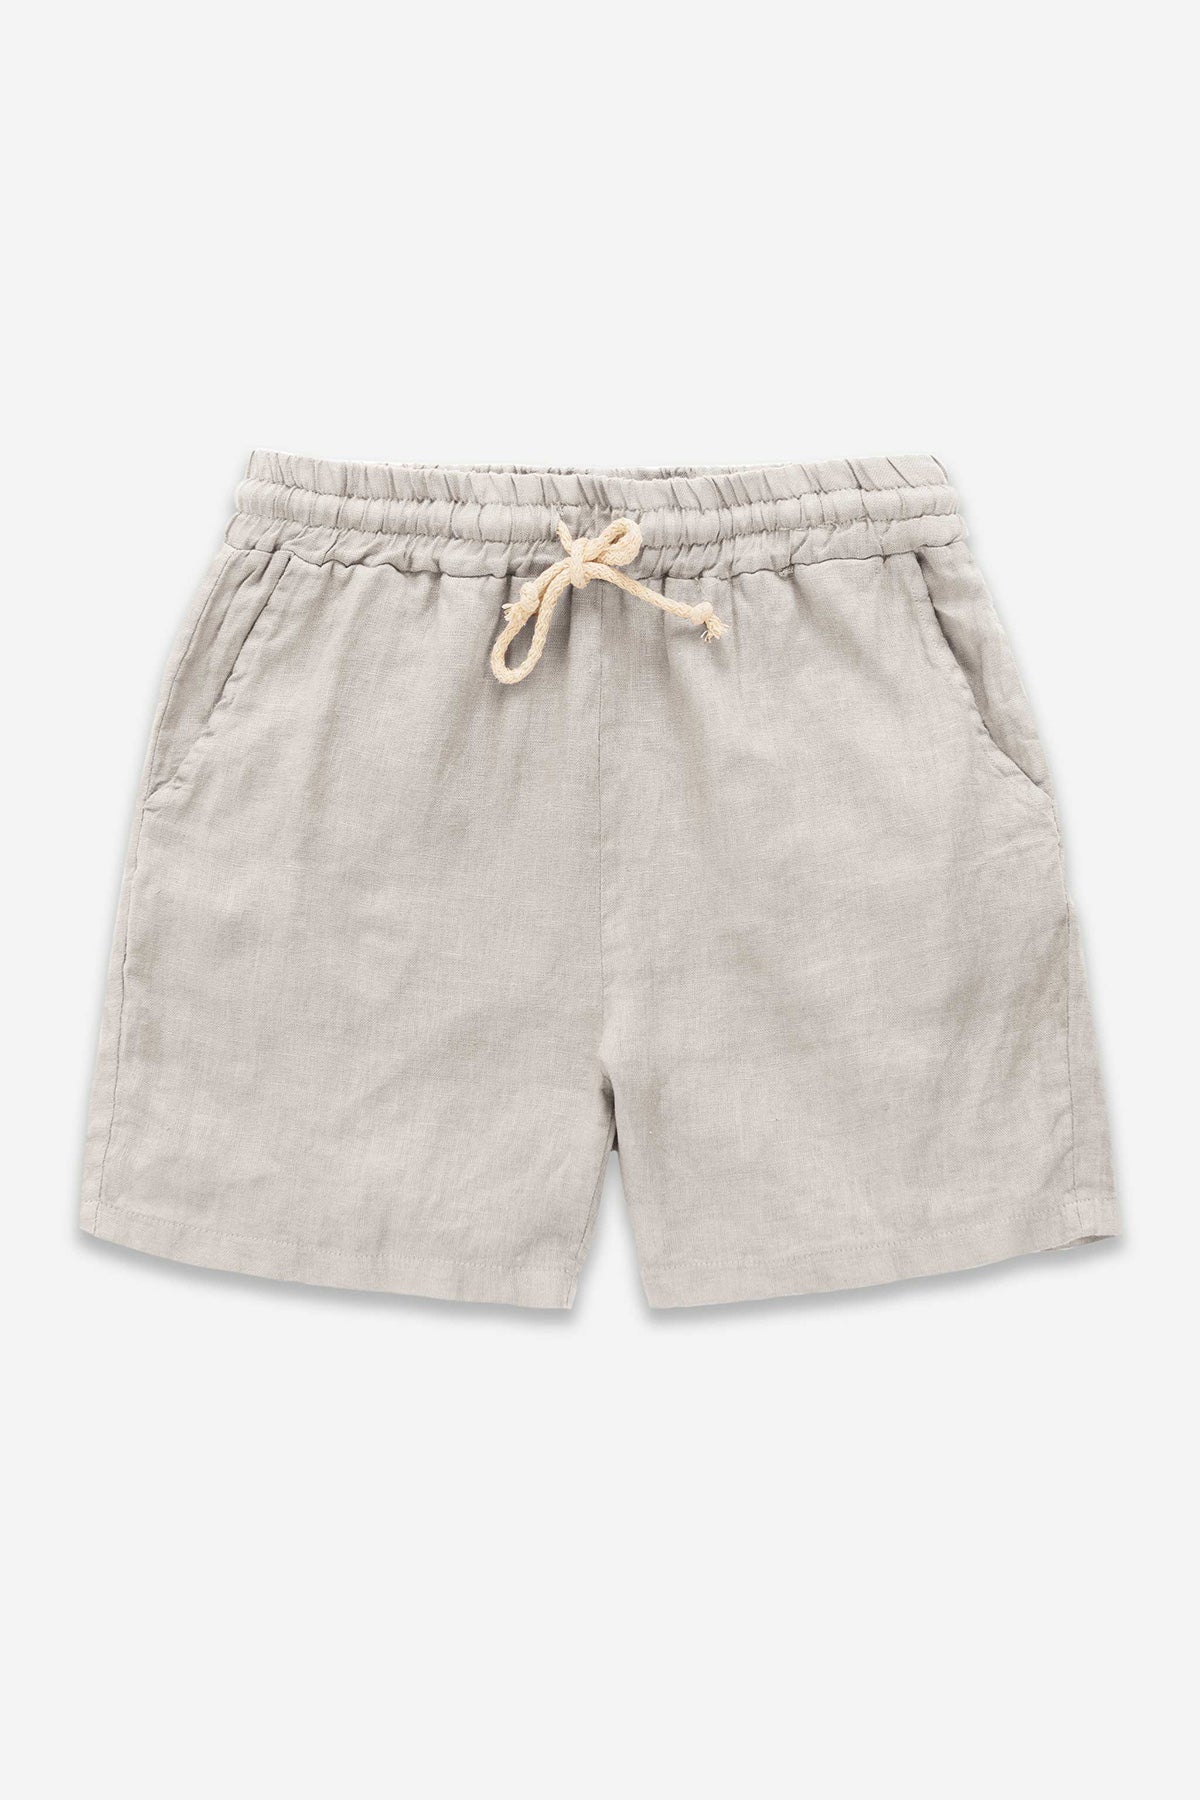 short fin Men's Linen Cargo Shorts (Natural, Size 30 L8002)